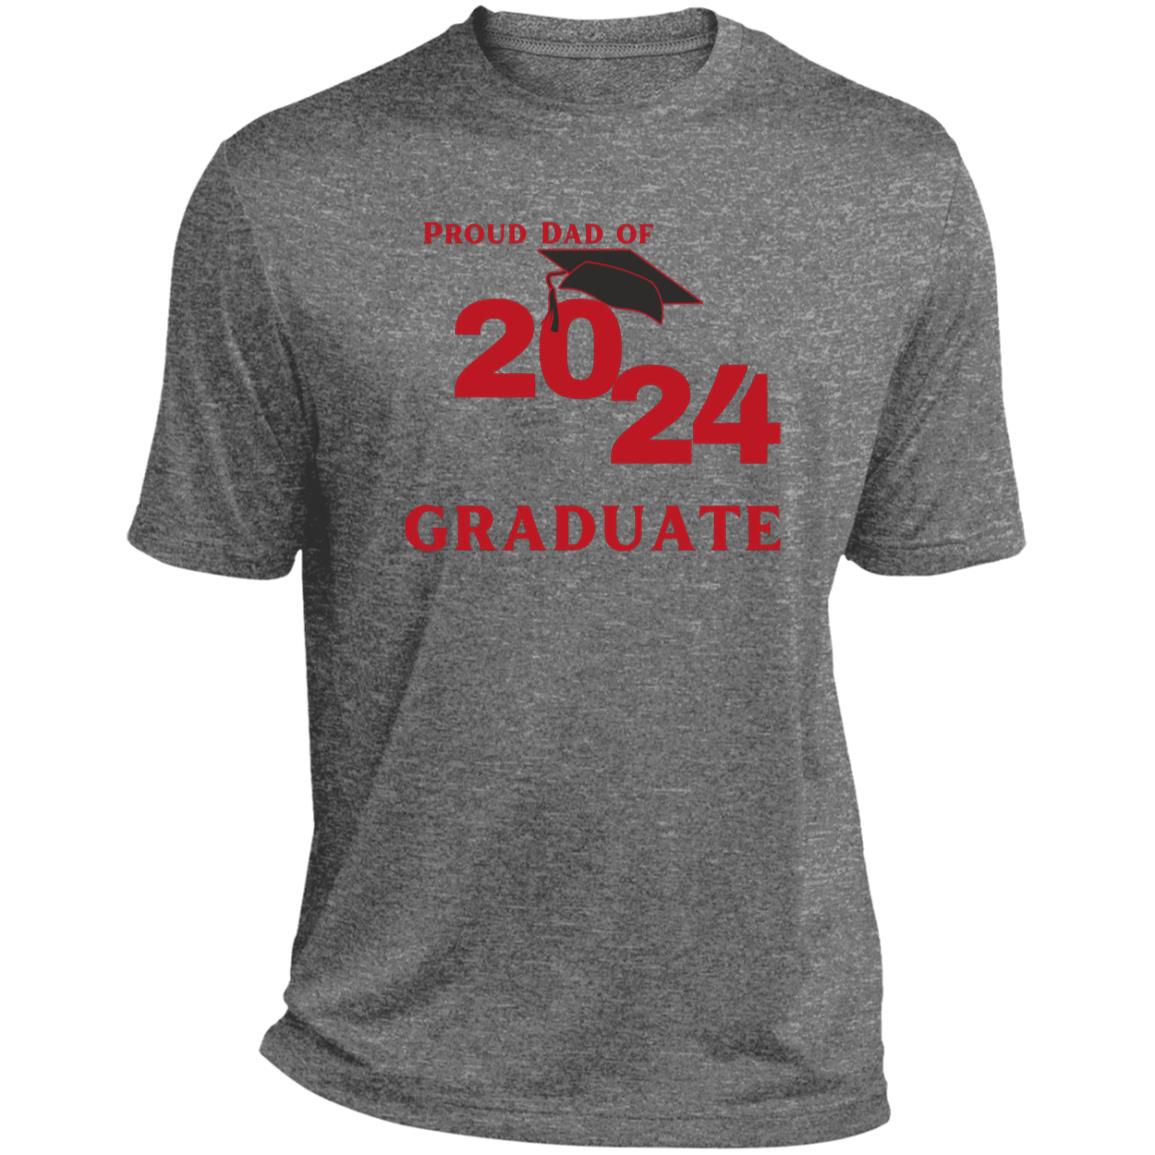 Proud Dad -- Graduate 2024 -- Performance Tee